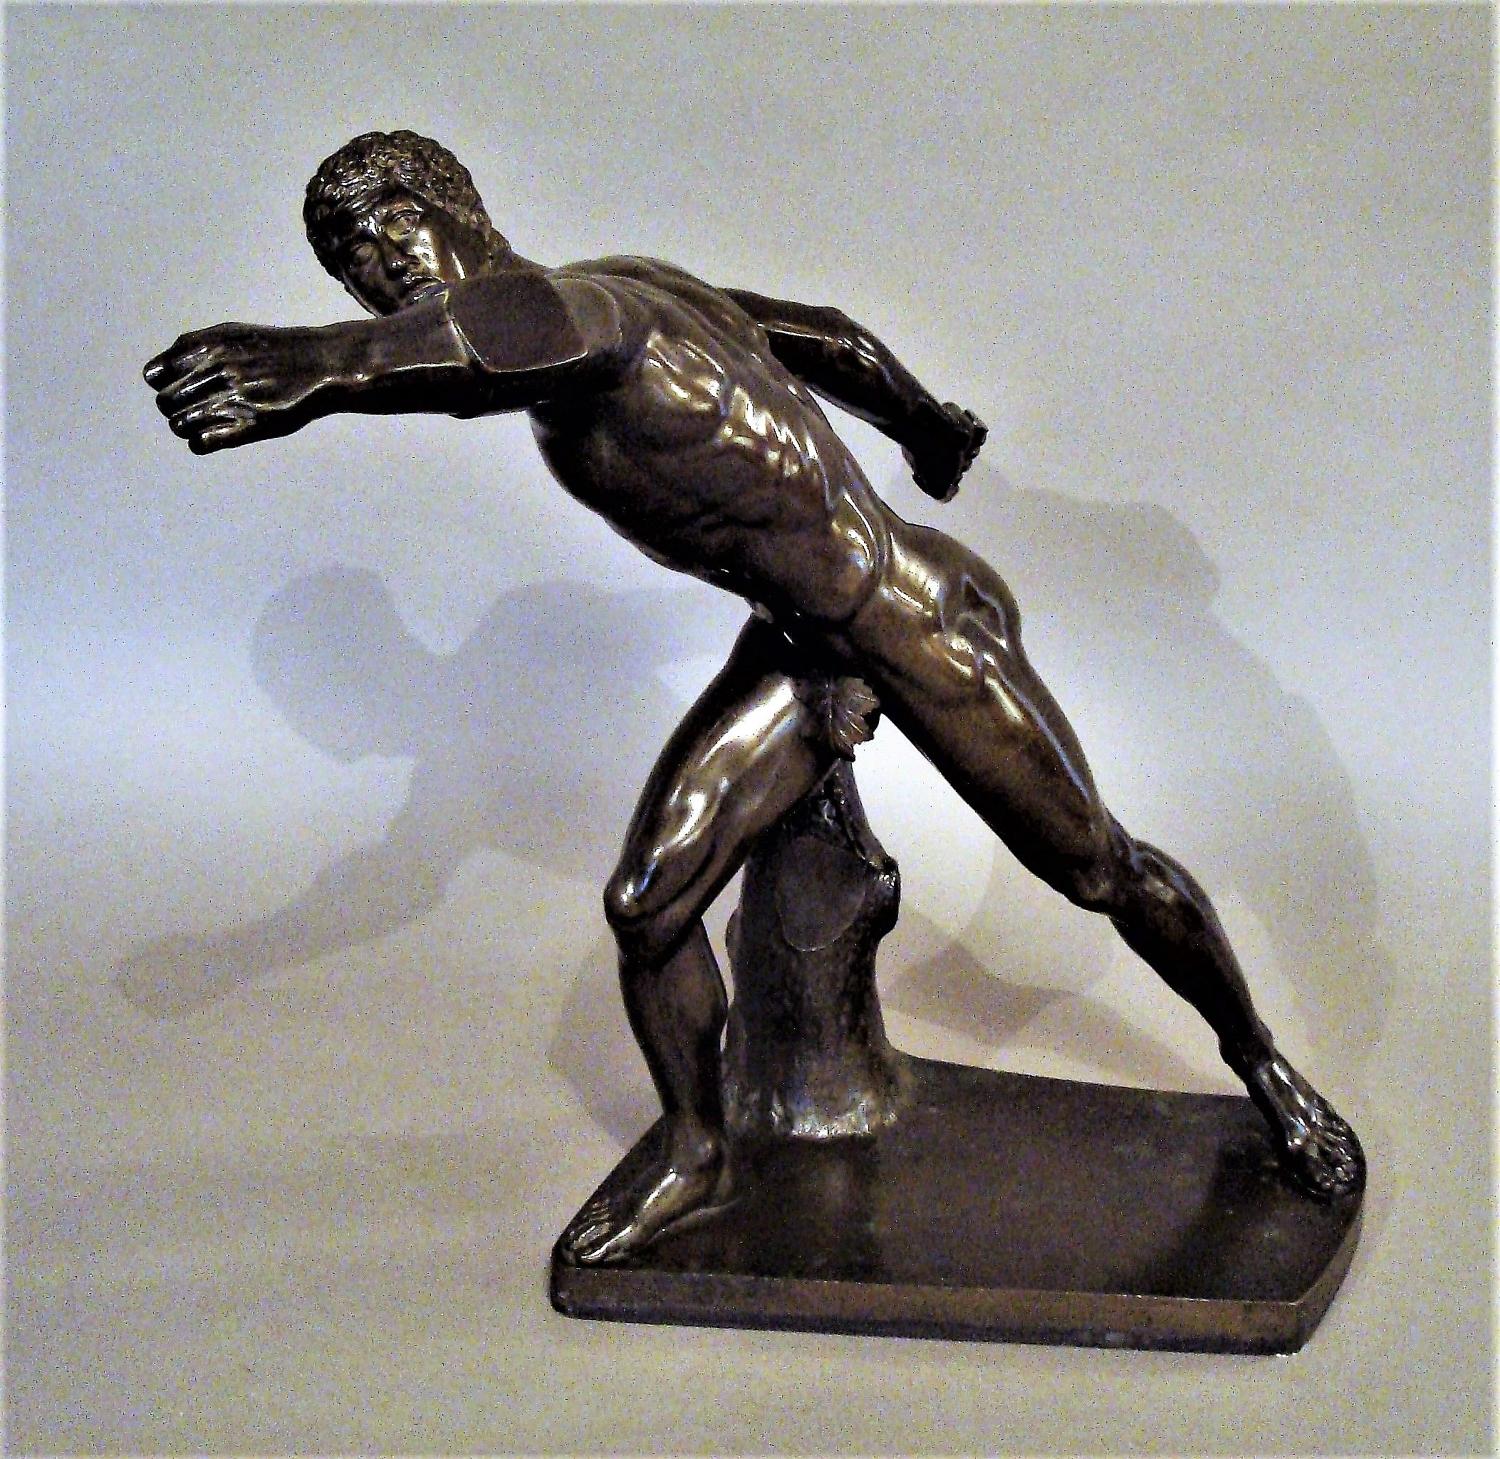 19th Century bronze sculpture